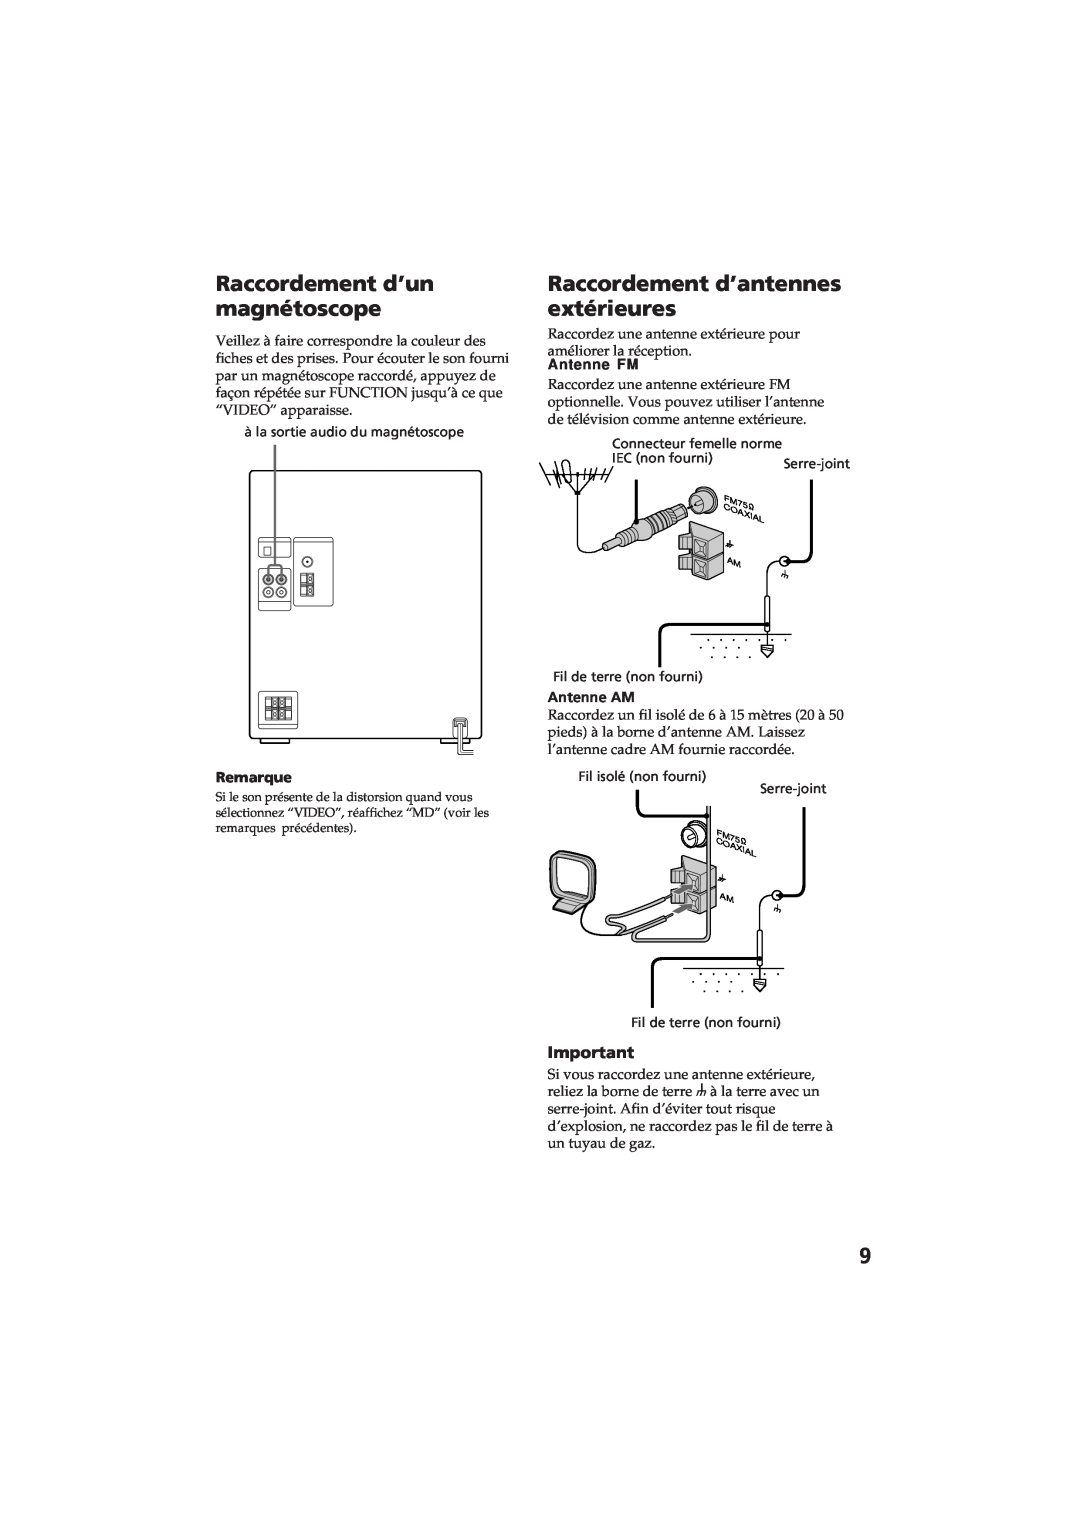 Sony MHC-RX80 manual Raccordement d’un magnétoscope, Raccordement d’antennes extérieures, Antenne AM, Remarque, Antenne FM 